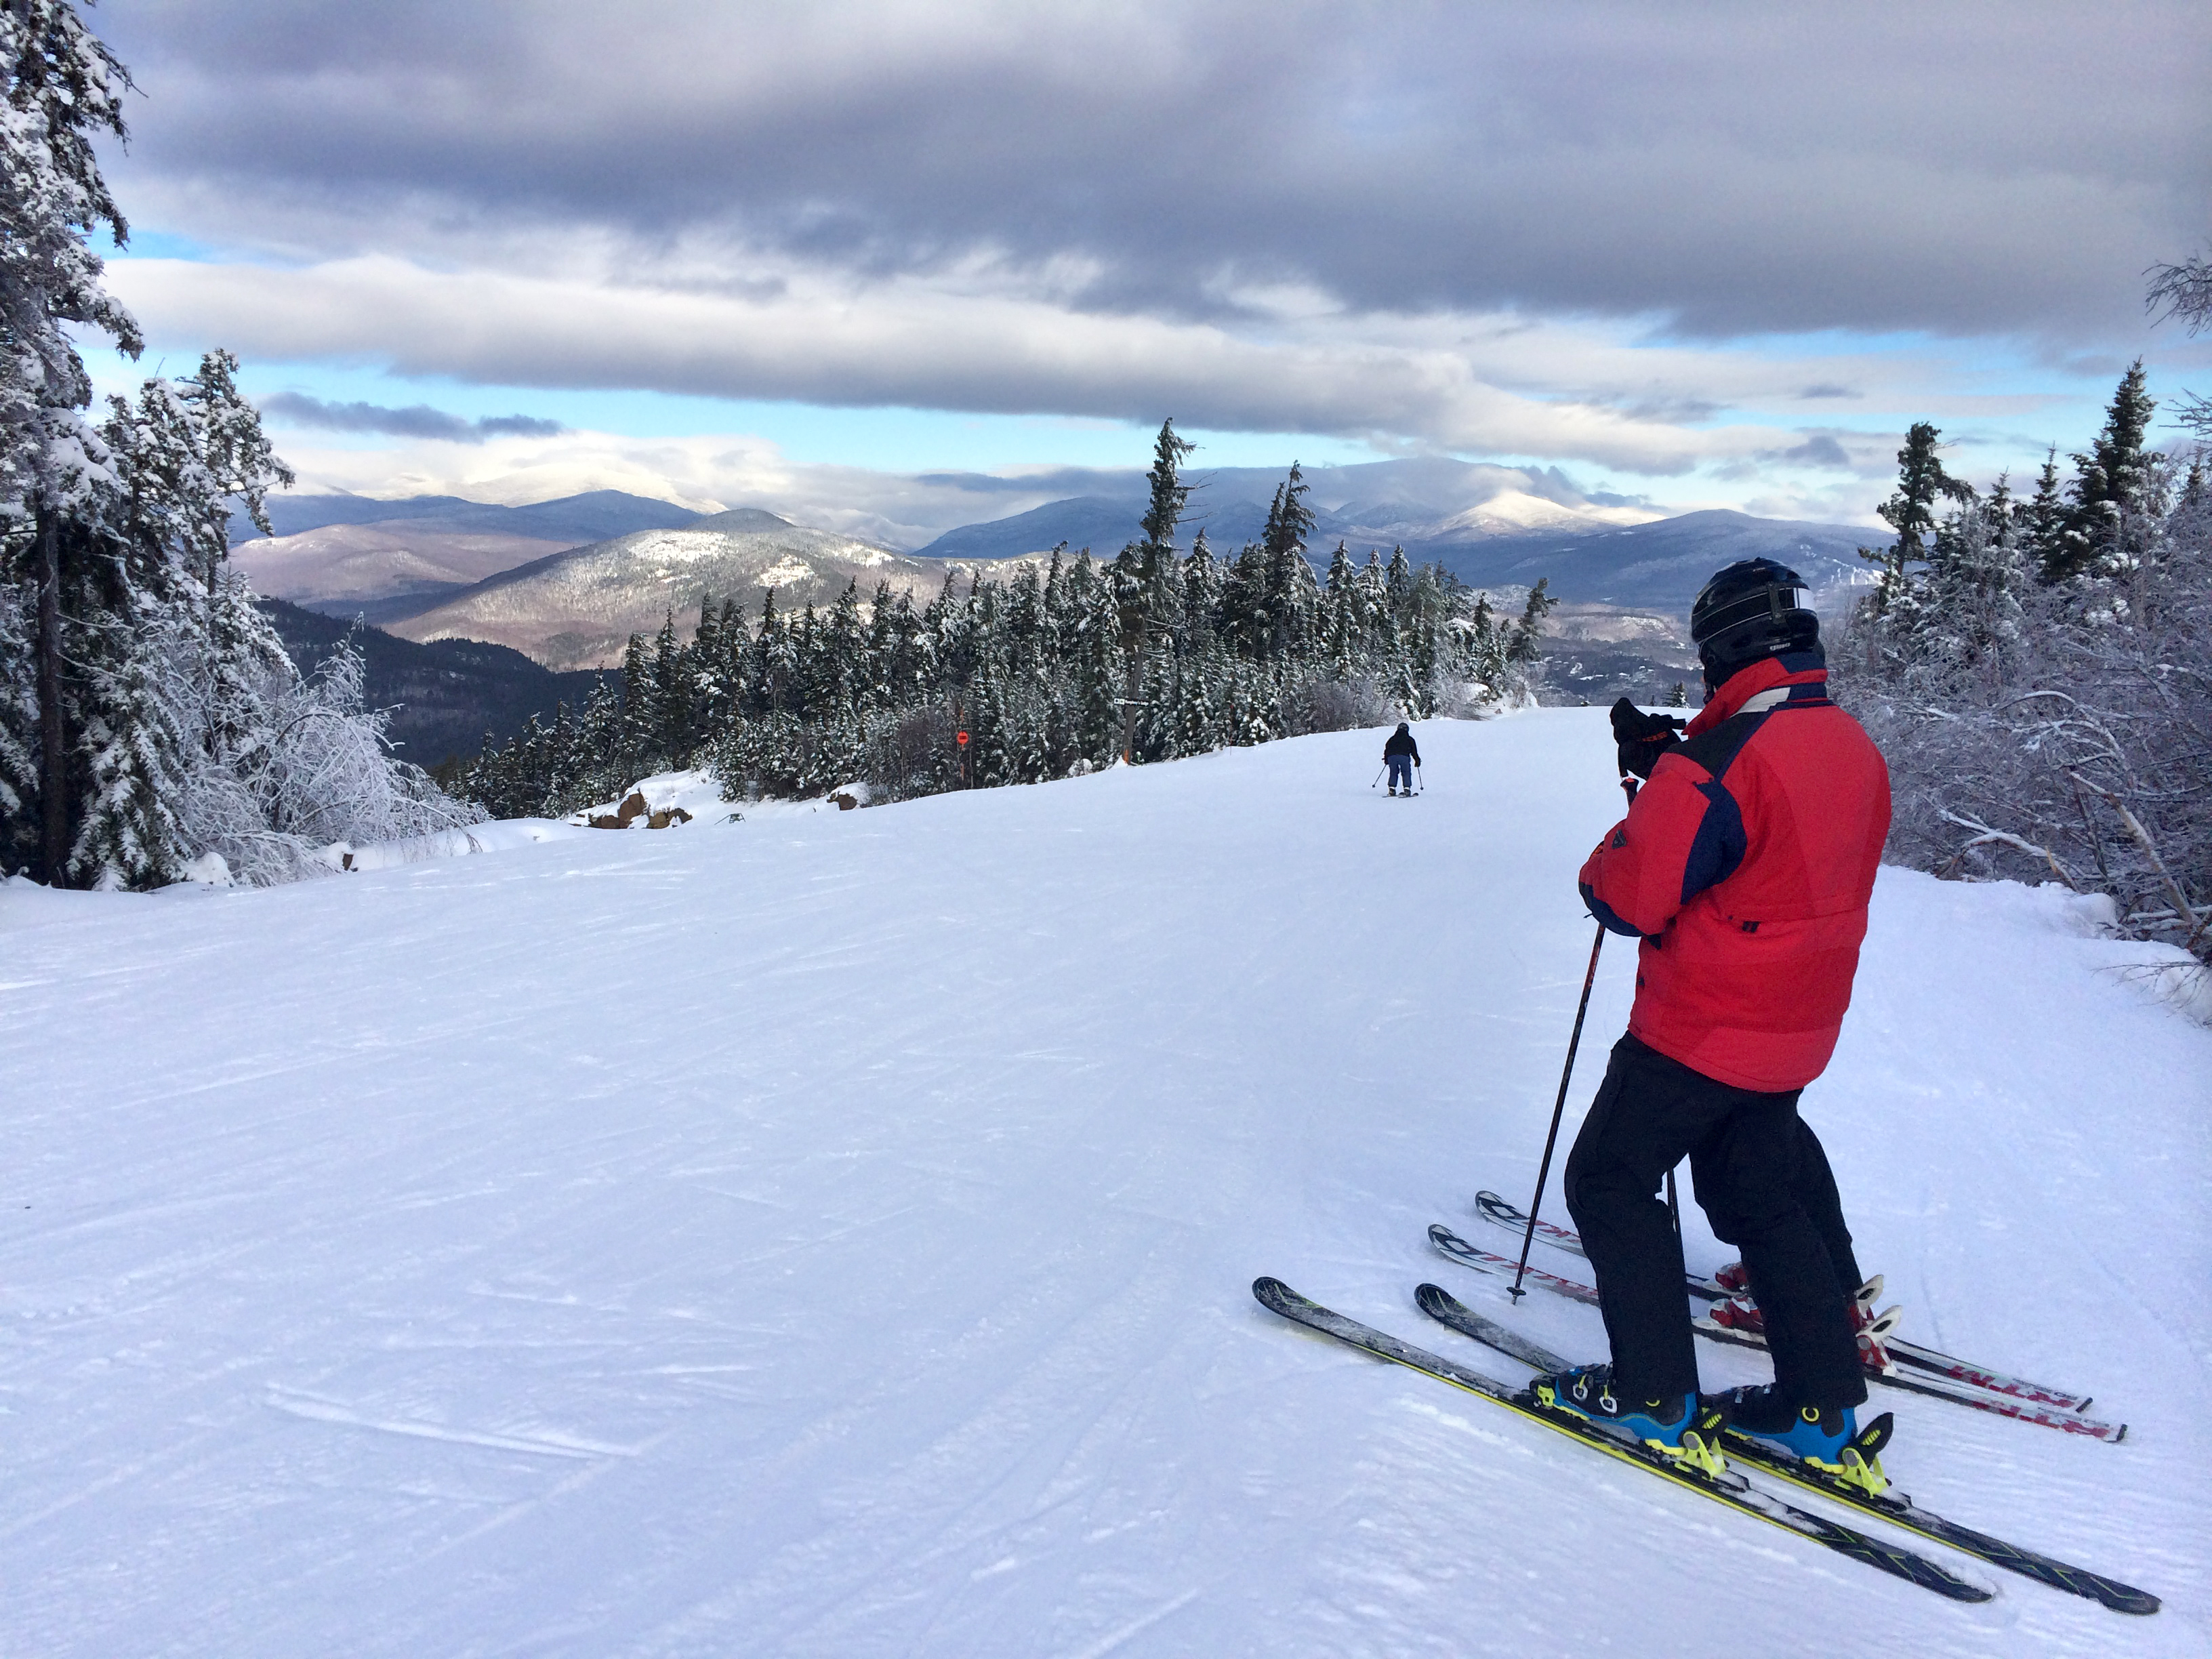 vermont skiing as a retirement destination perk